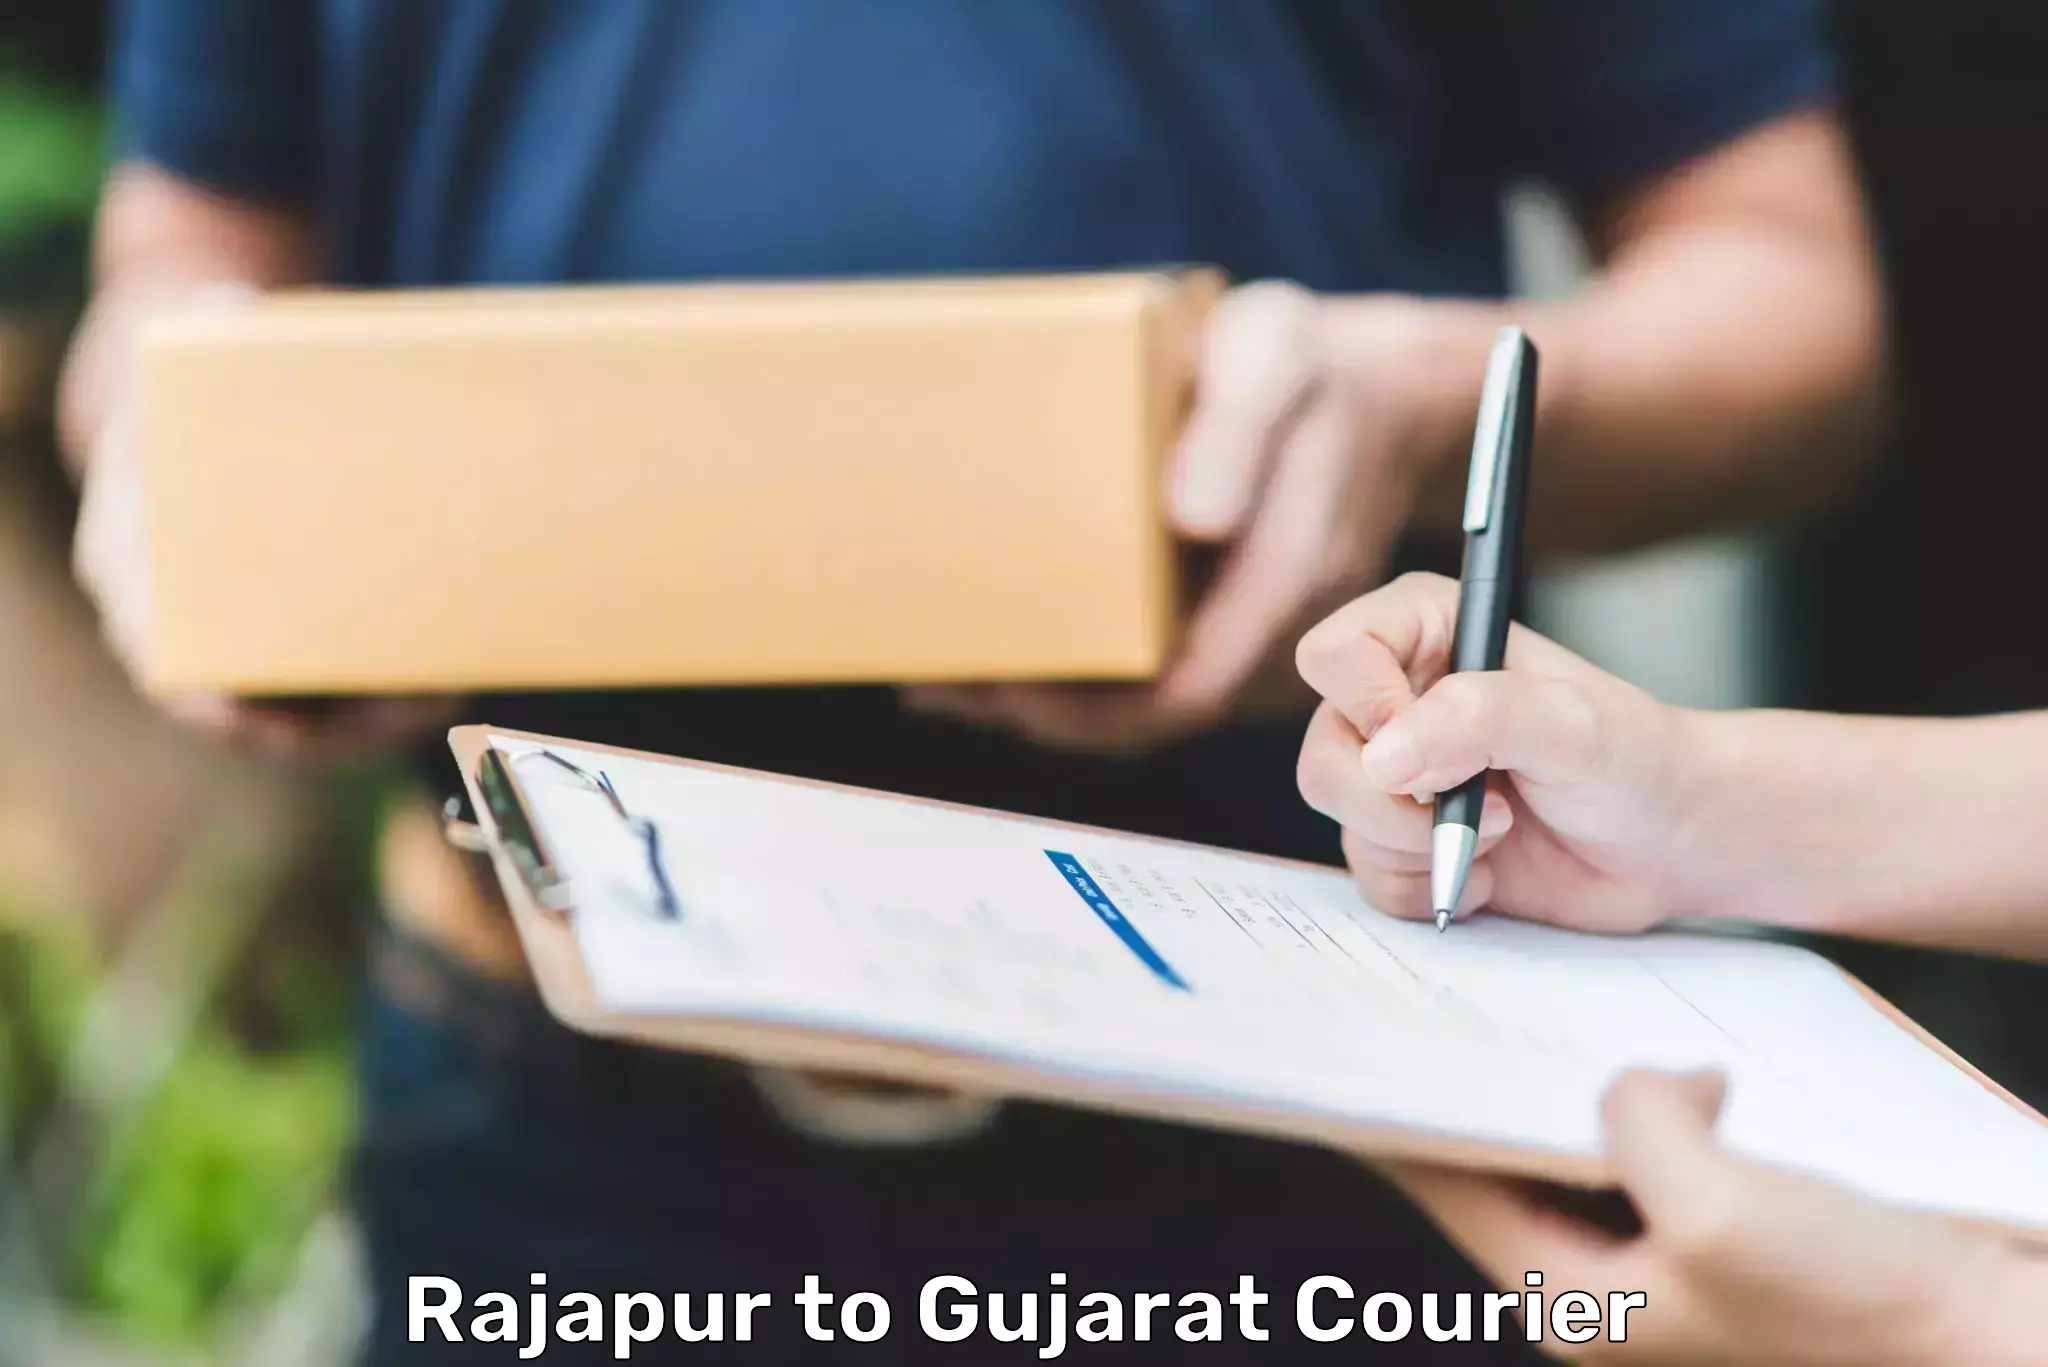 Courier service comparison Rajapur to Gandhinagar